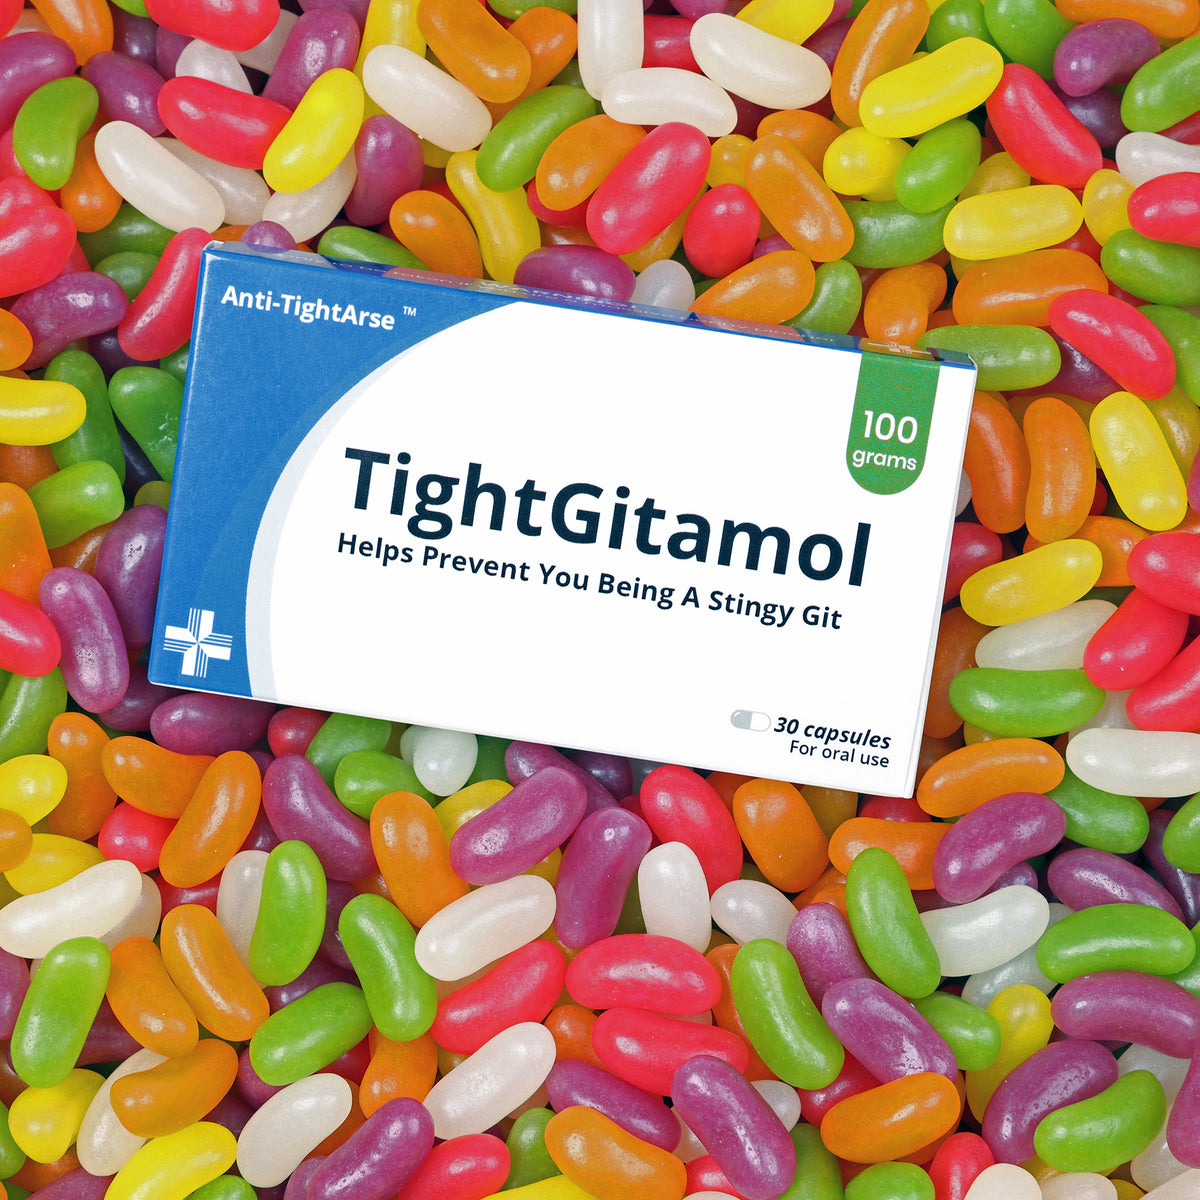 Tightgitamol Joke Tablet Box With Jelly Beans